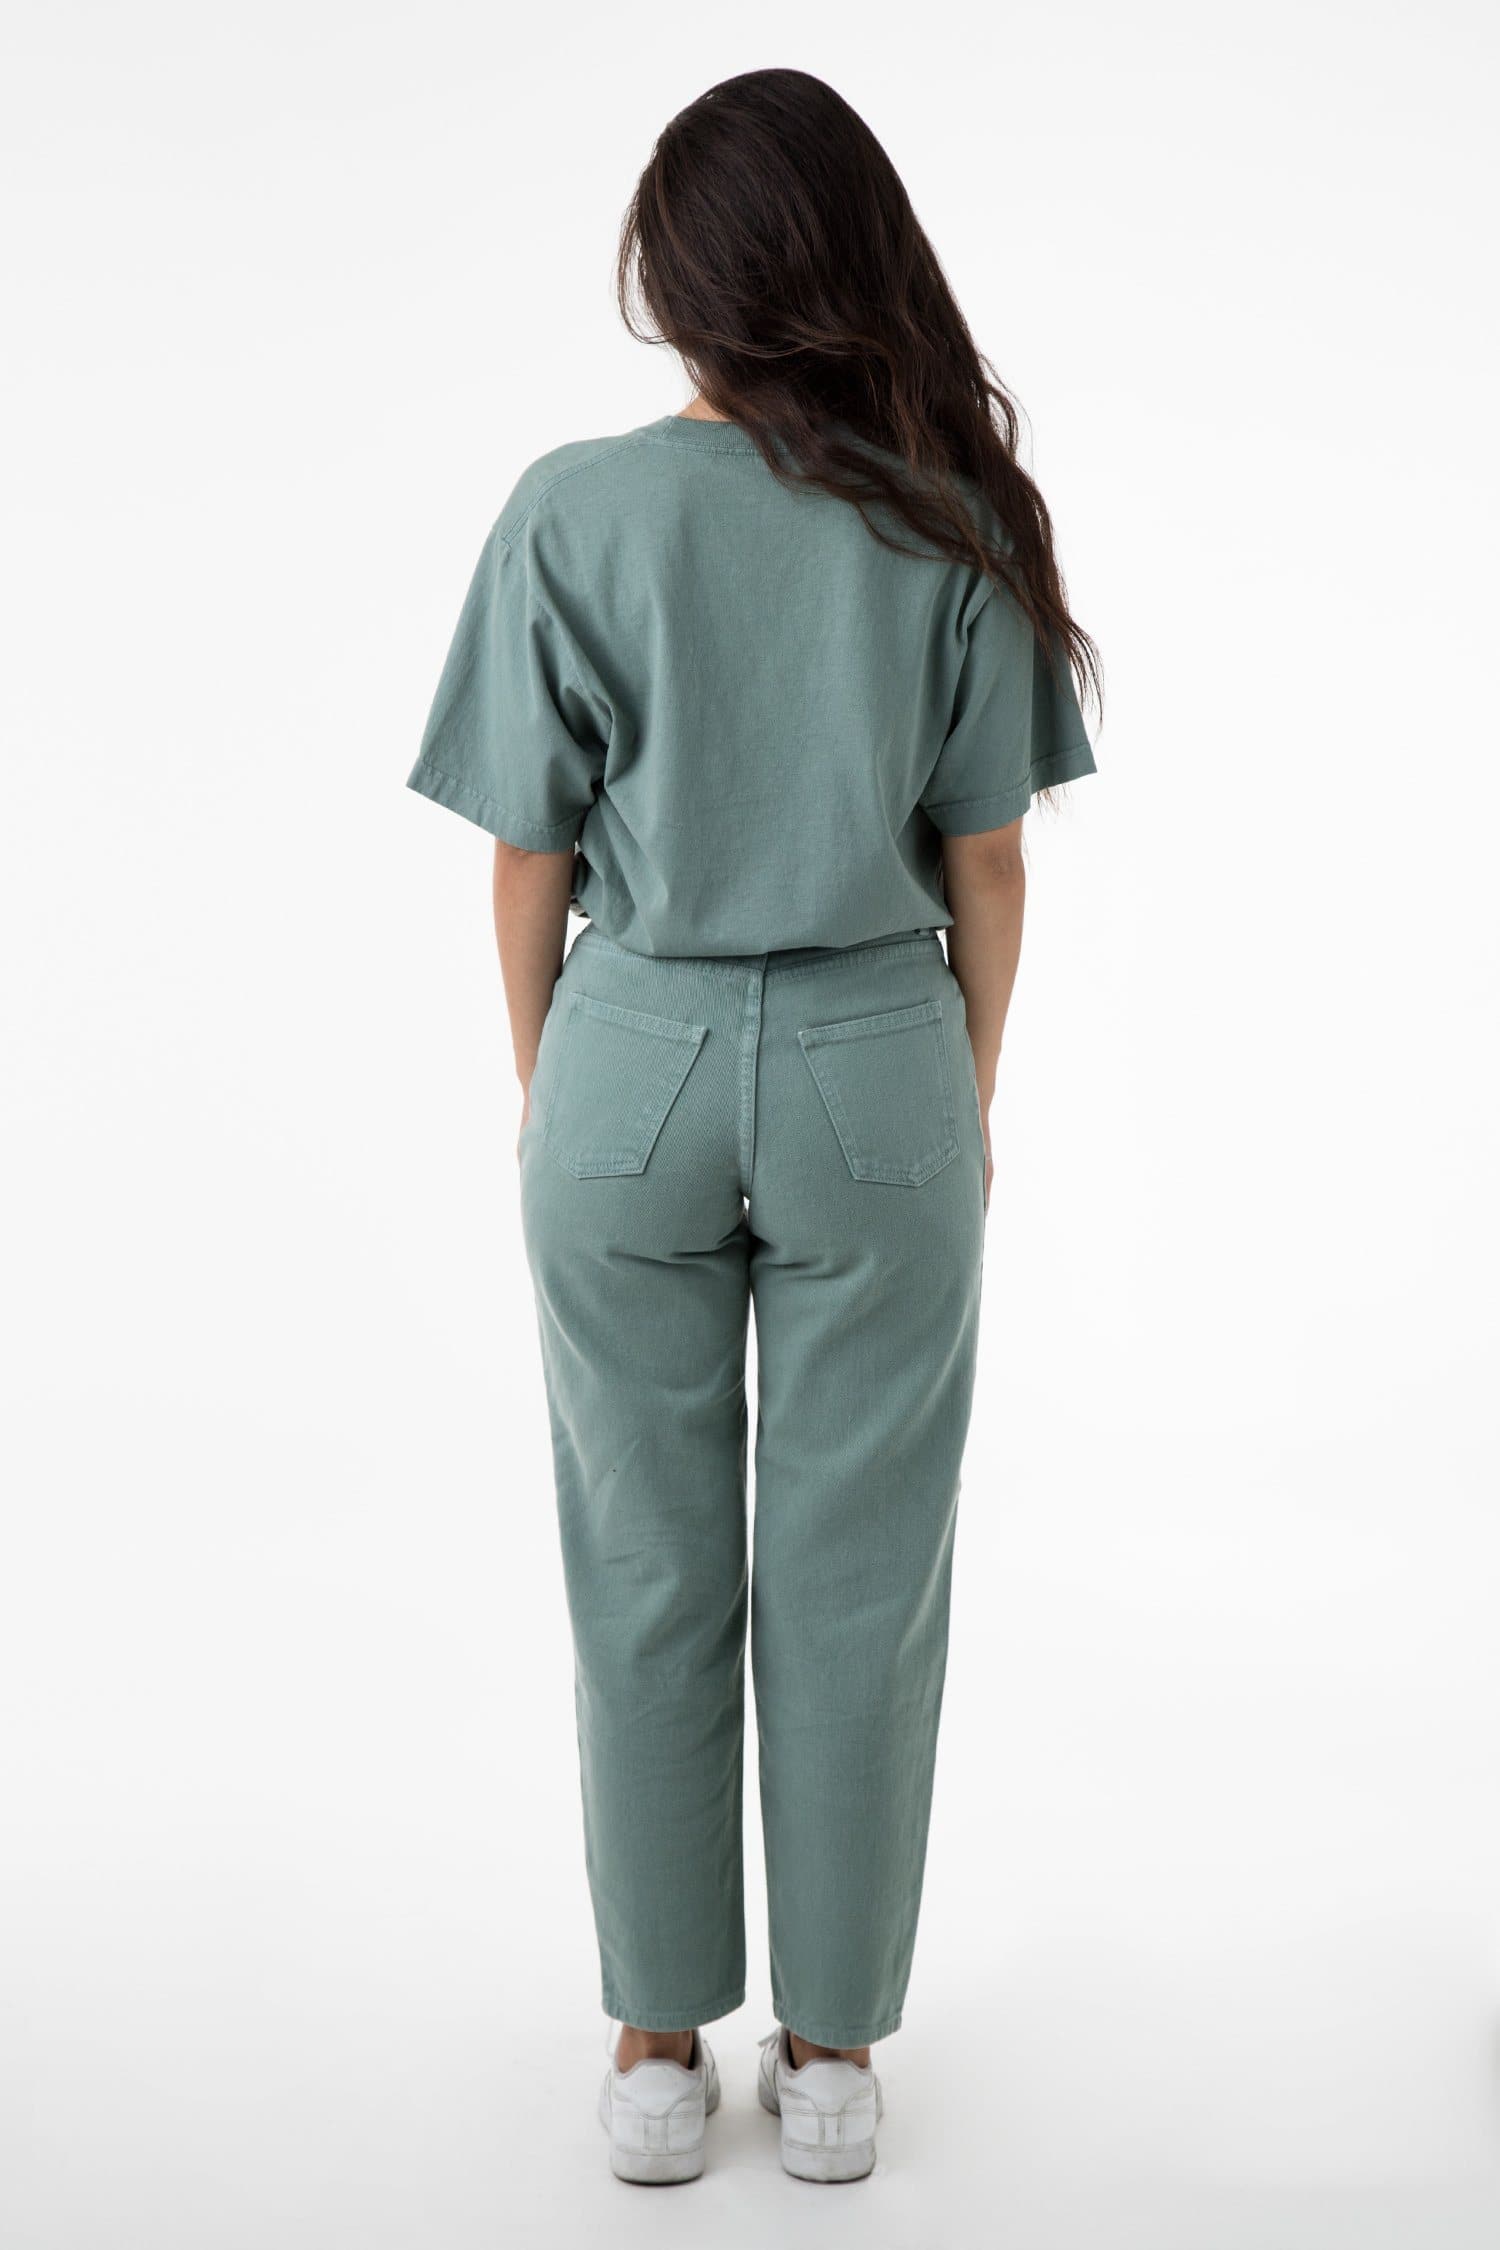 RBDW01GD - Garment Dye Women's Relaxed Fit Bull Denim Jean ...